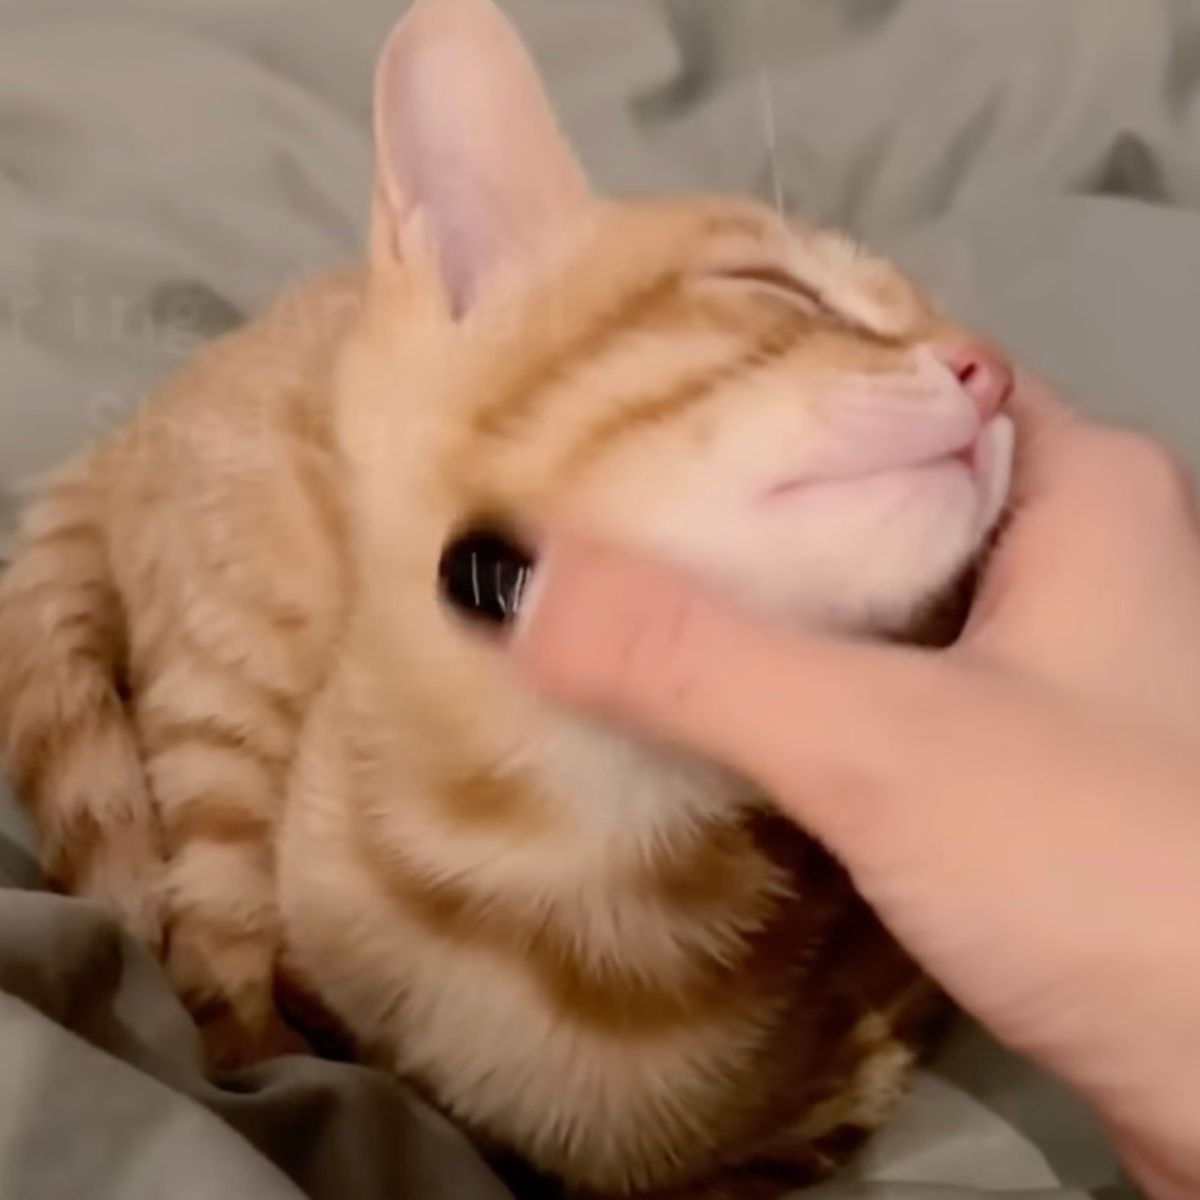 kitten snuggling